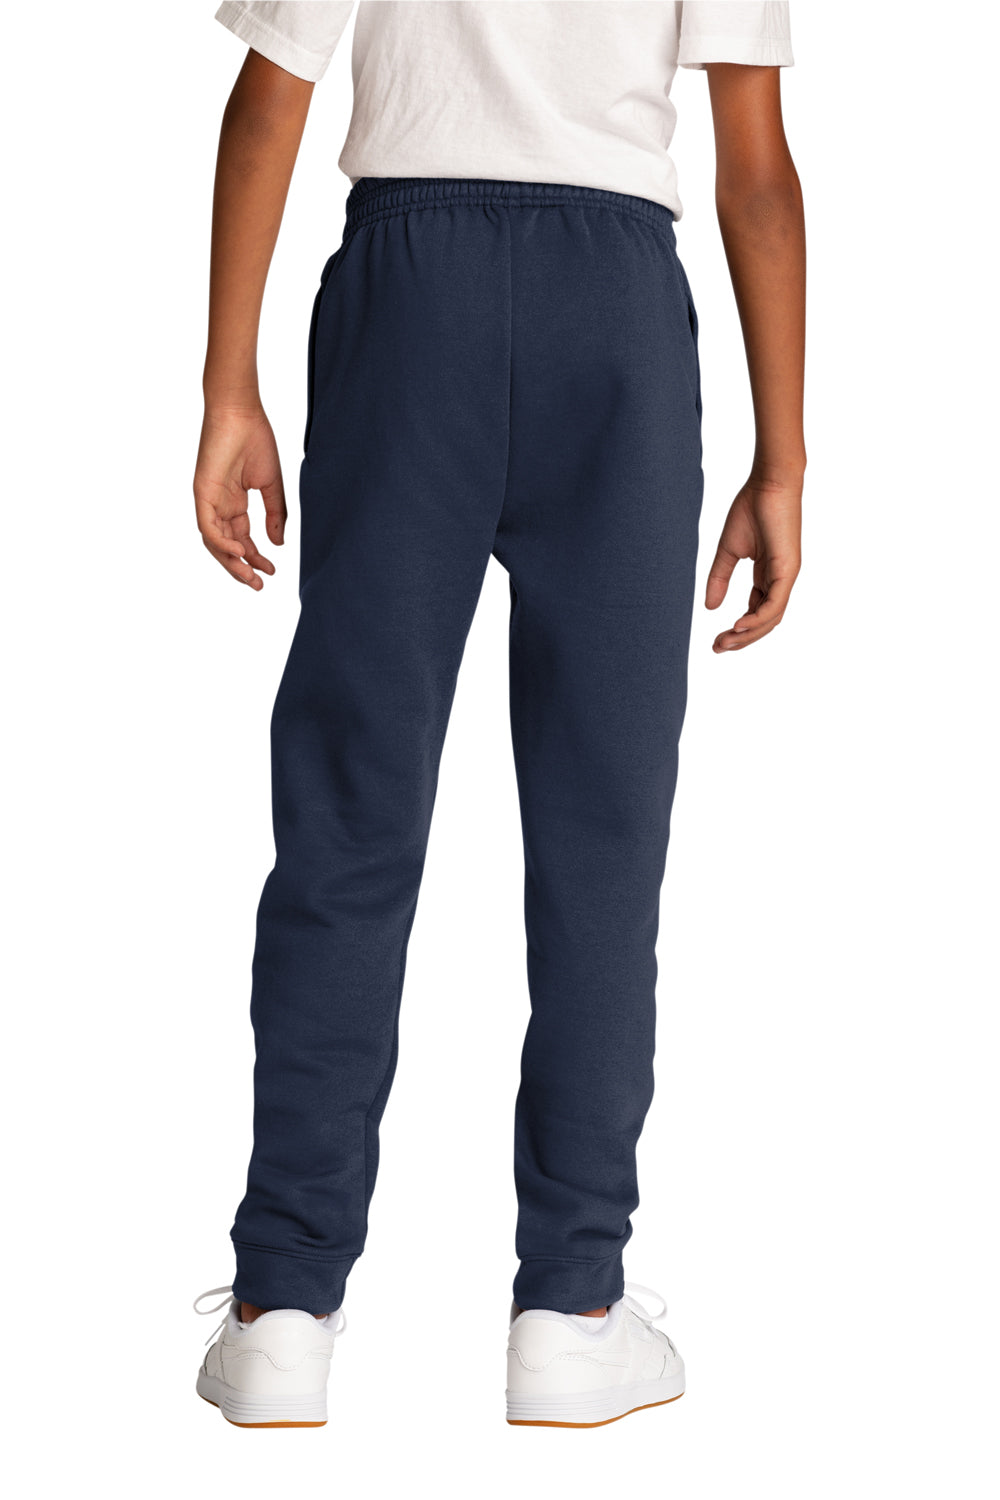 Port & Company PC78YJ Core Fleece Jogger Sweatpants w/ Pockets Navy Blue Back